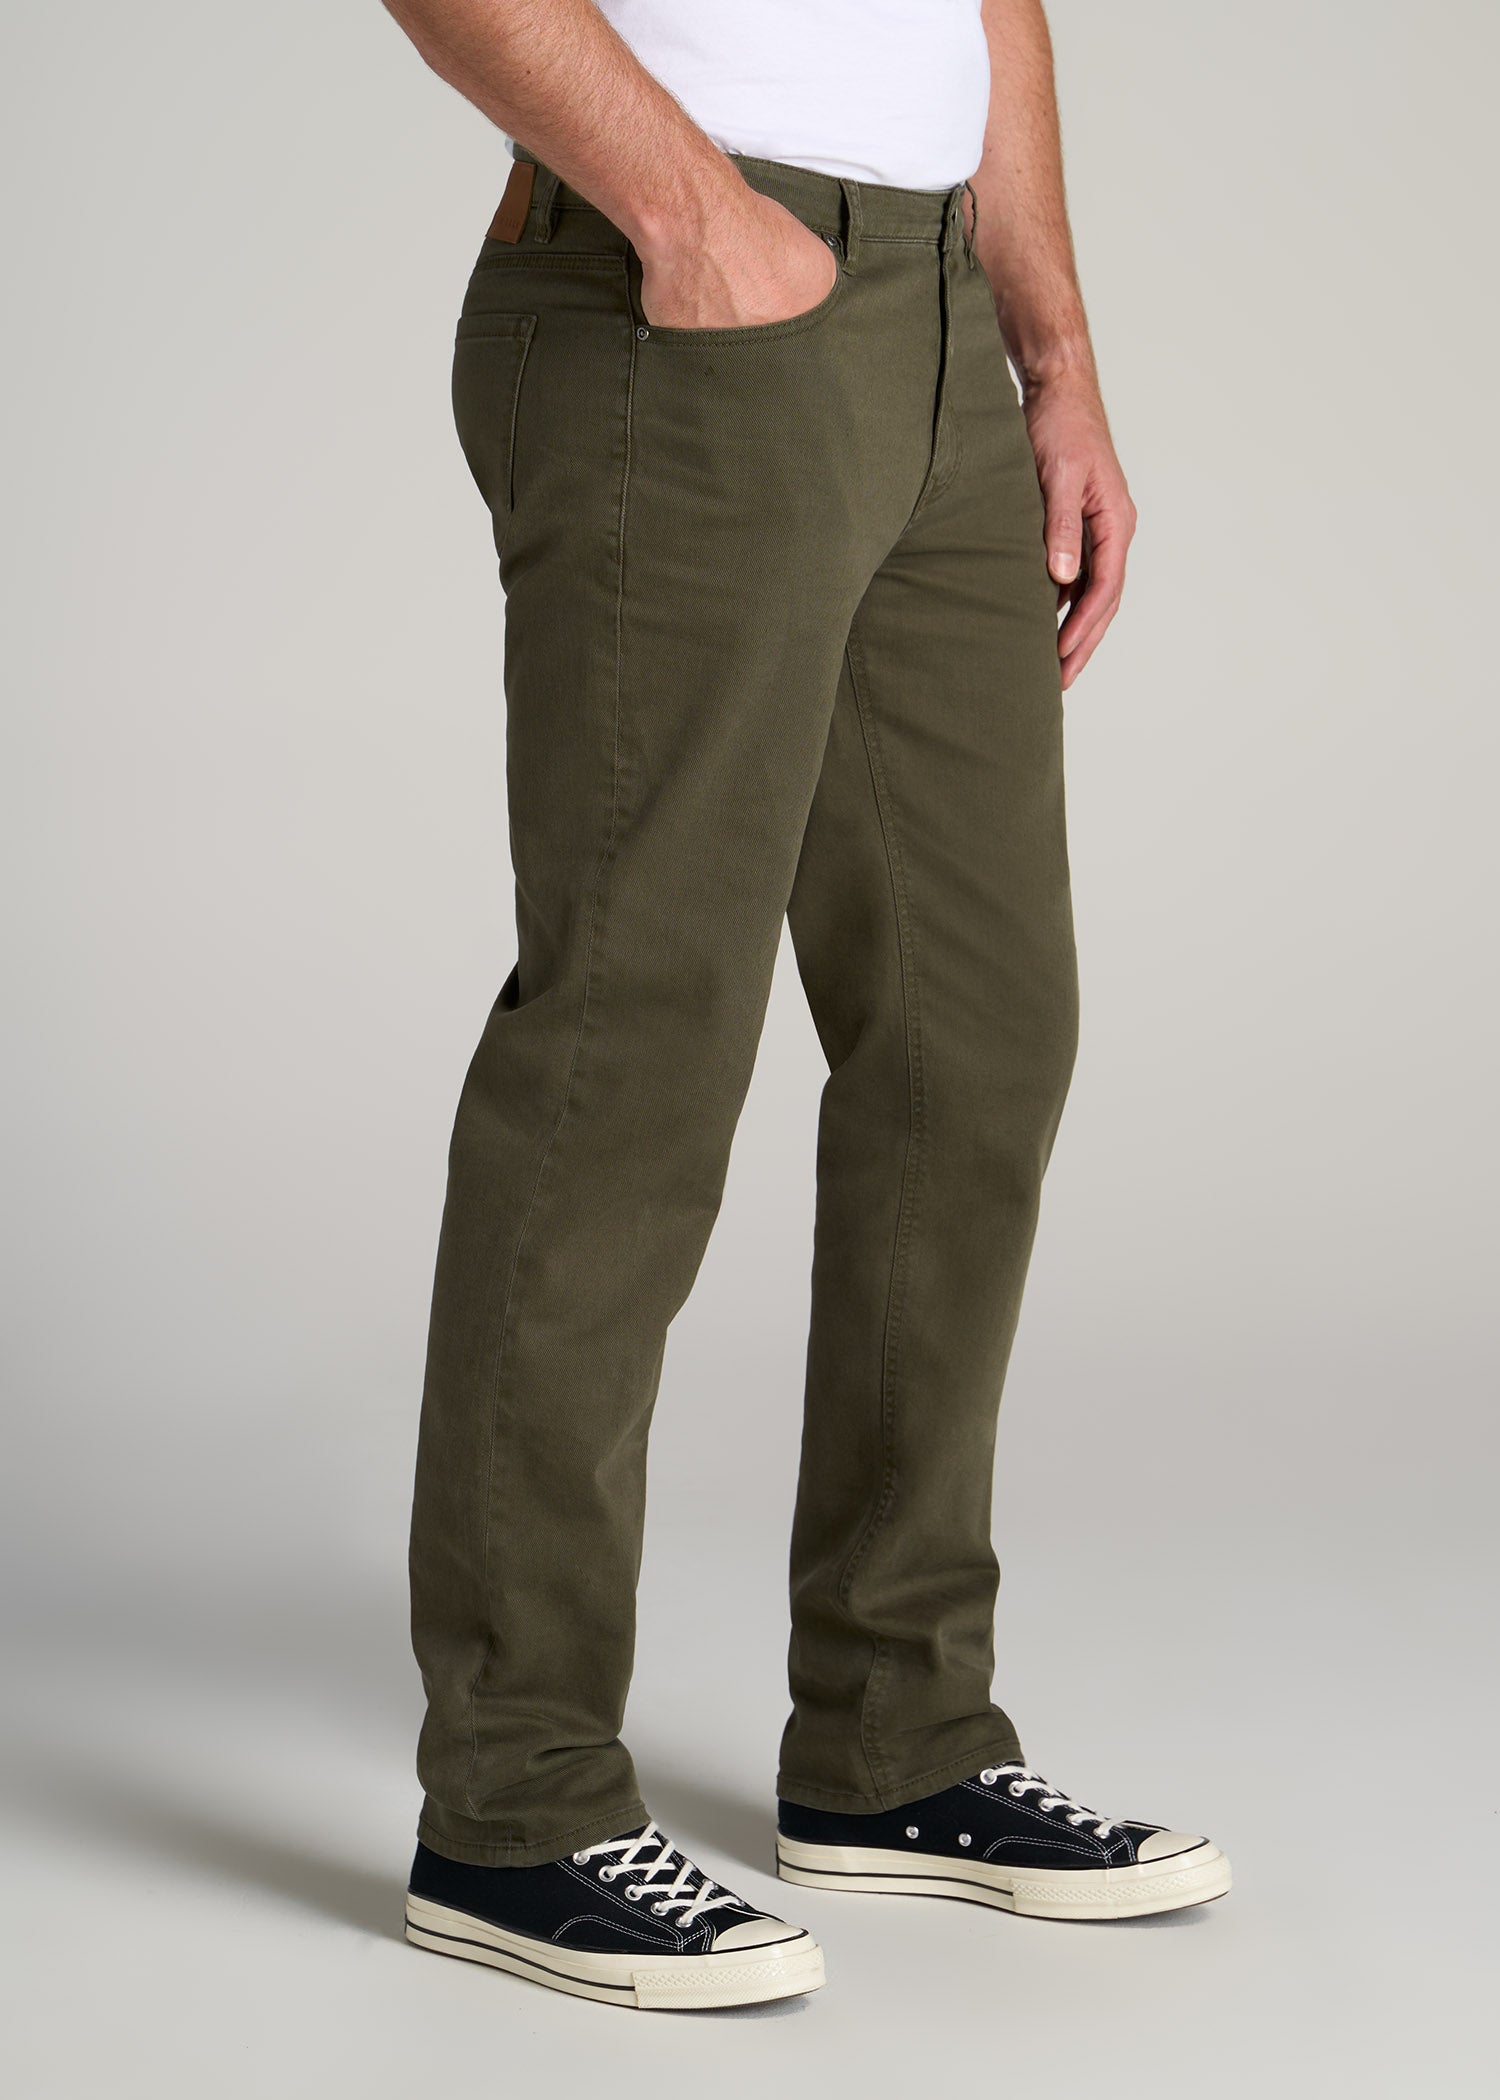 American-Tall-Men-J1-Jeans-Olive-Green-Wash-side